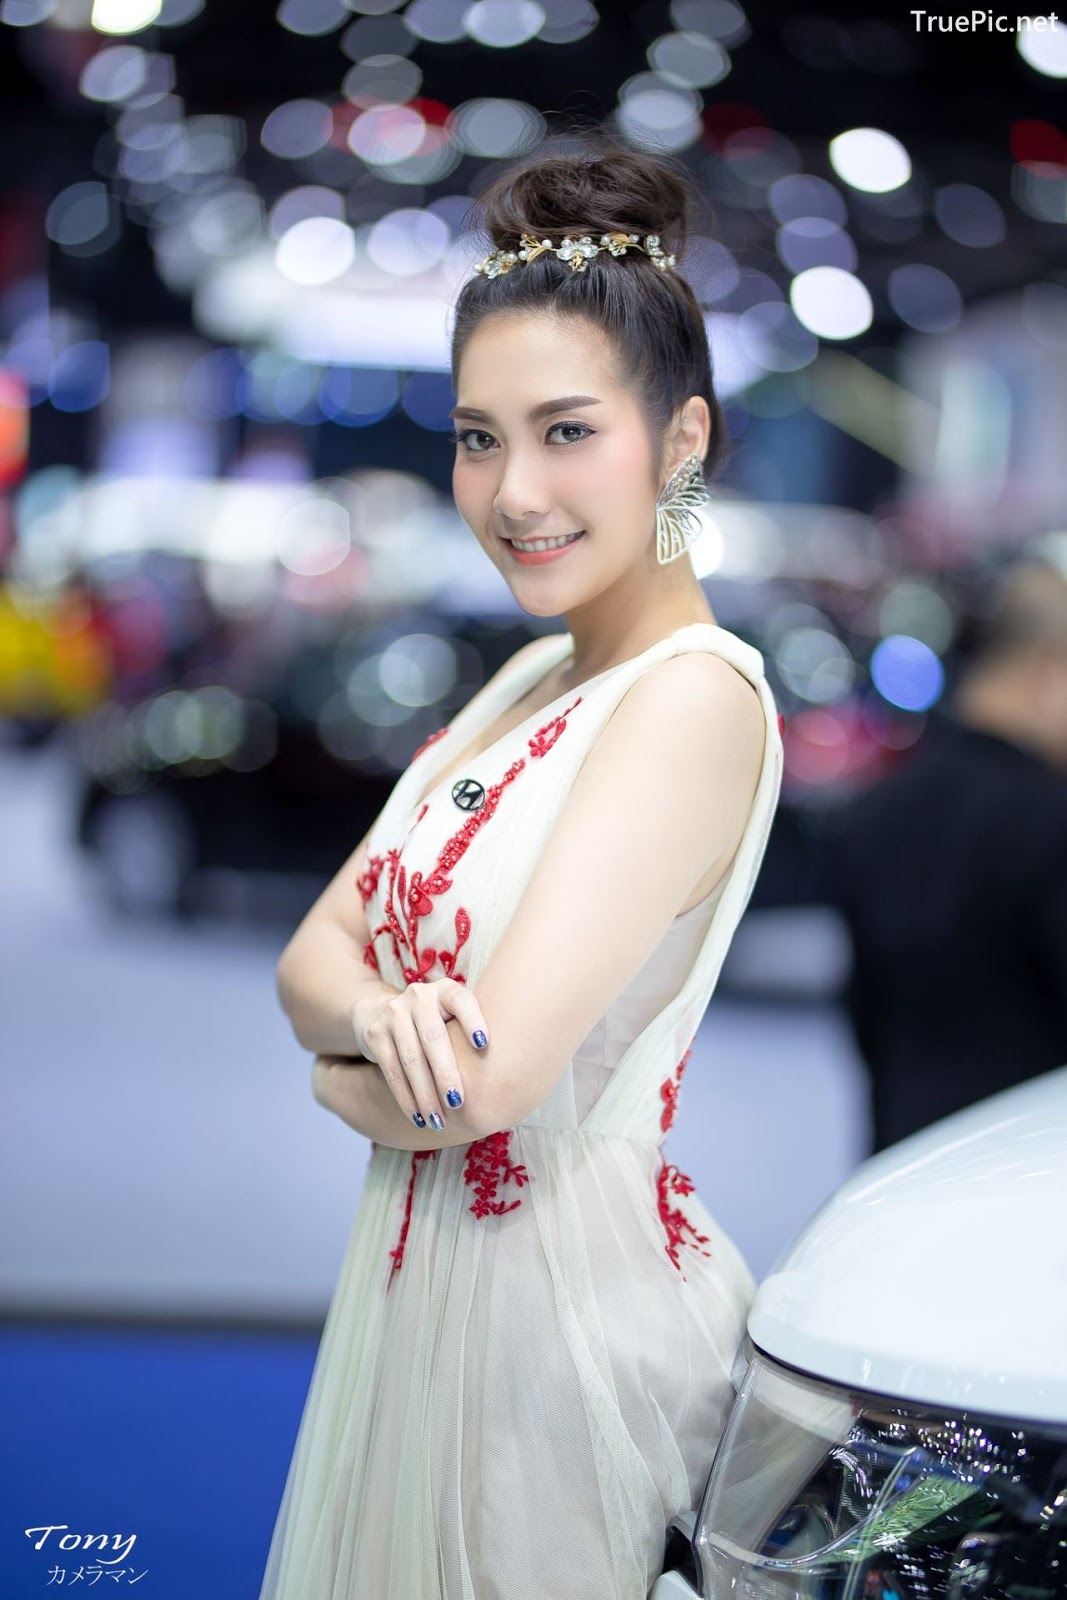 Image-Thailand-Hot-Model-Thai-Racing-Girl-At-Big-Motor-2018-TruePic.net- Picture-128